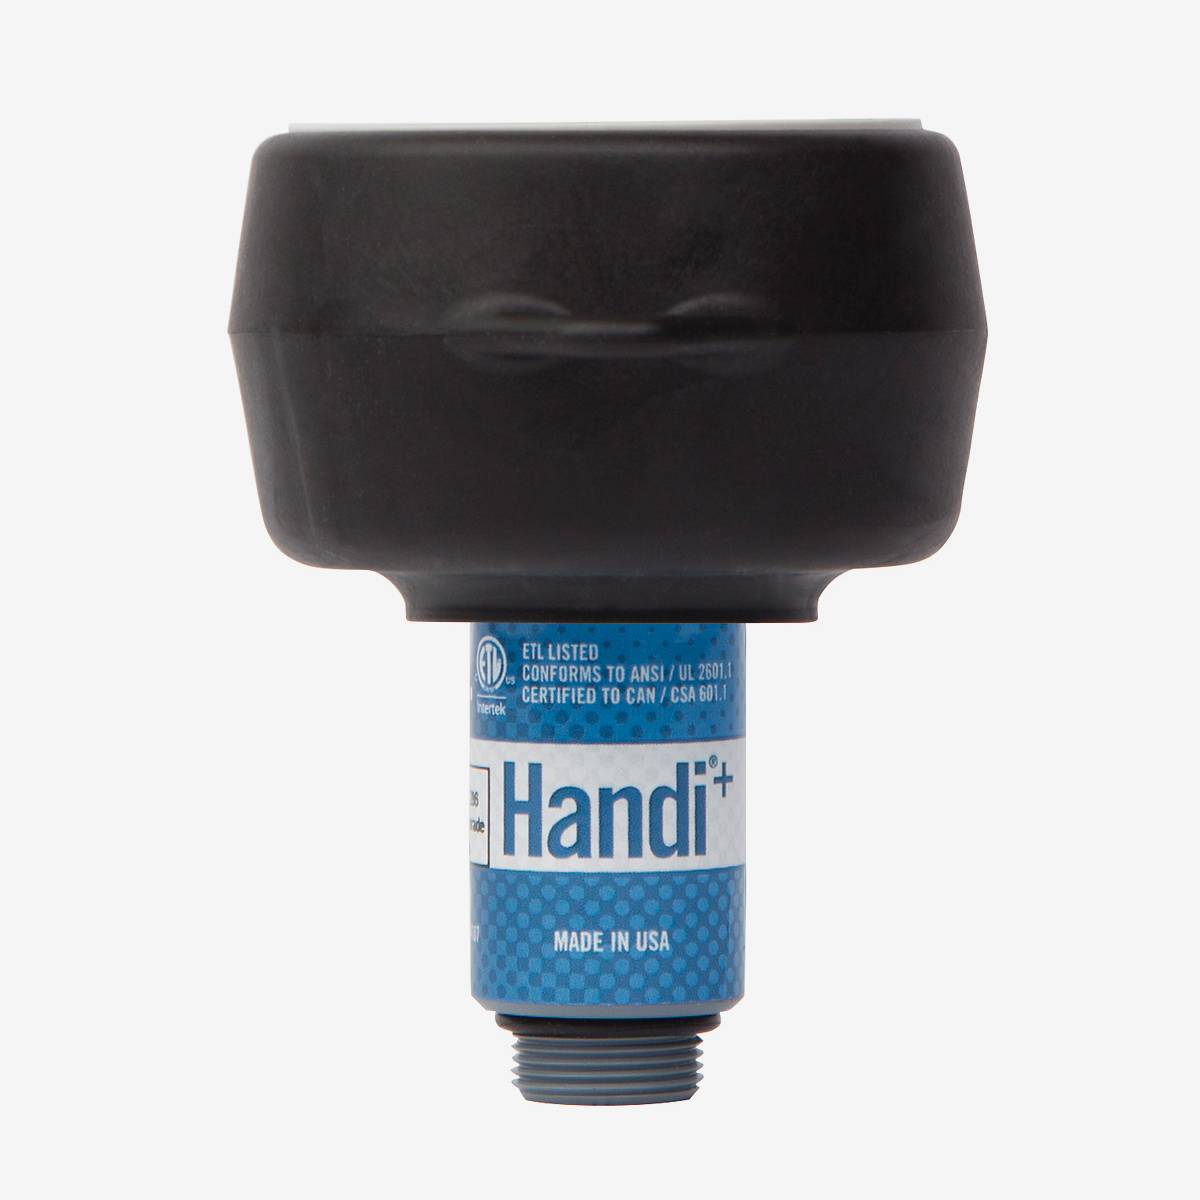 Side view of black Handi+ industrial oxygen analyzer on background